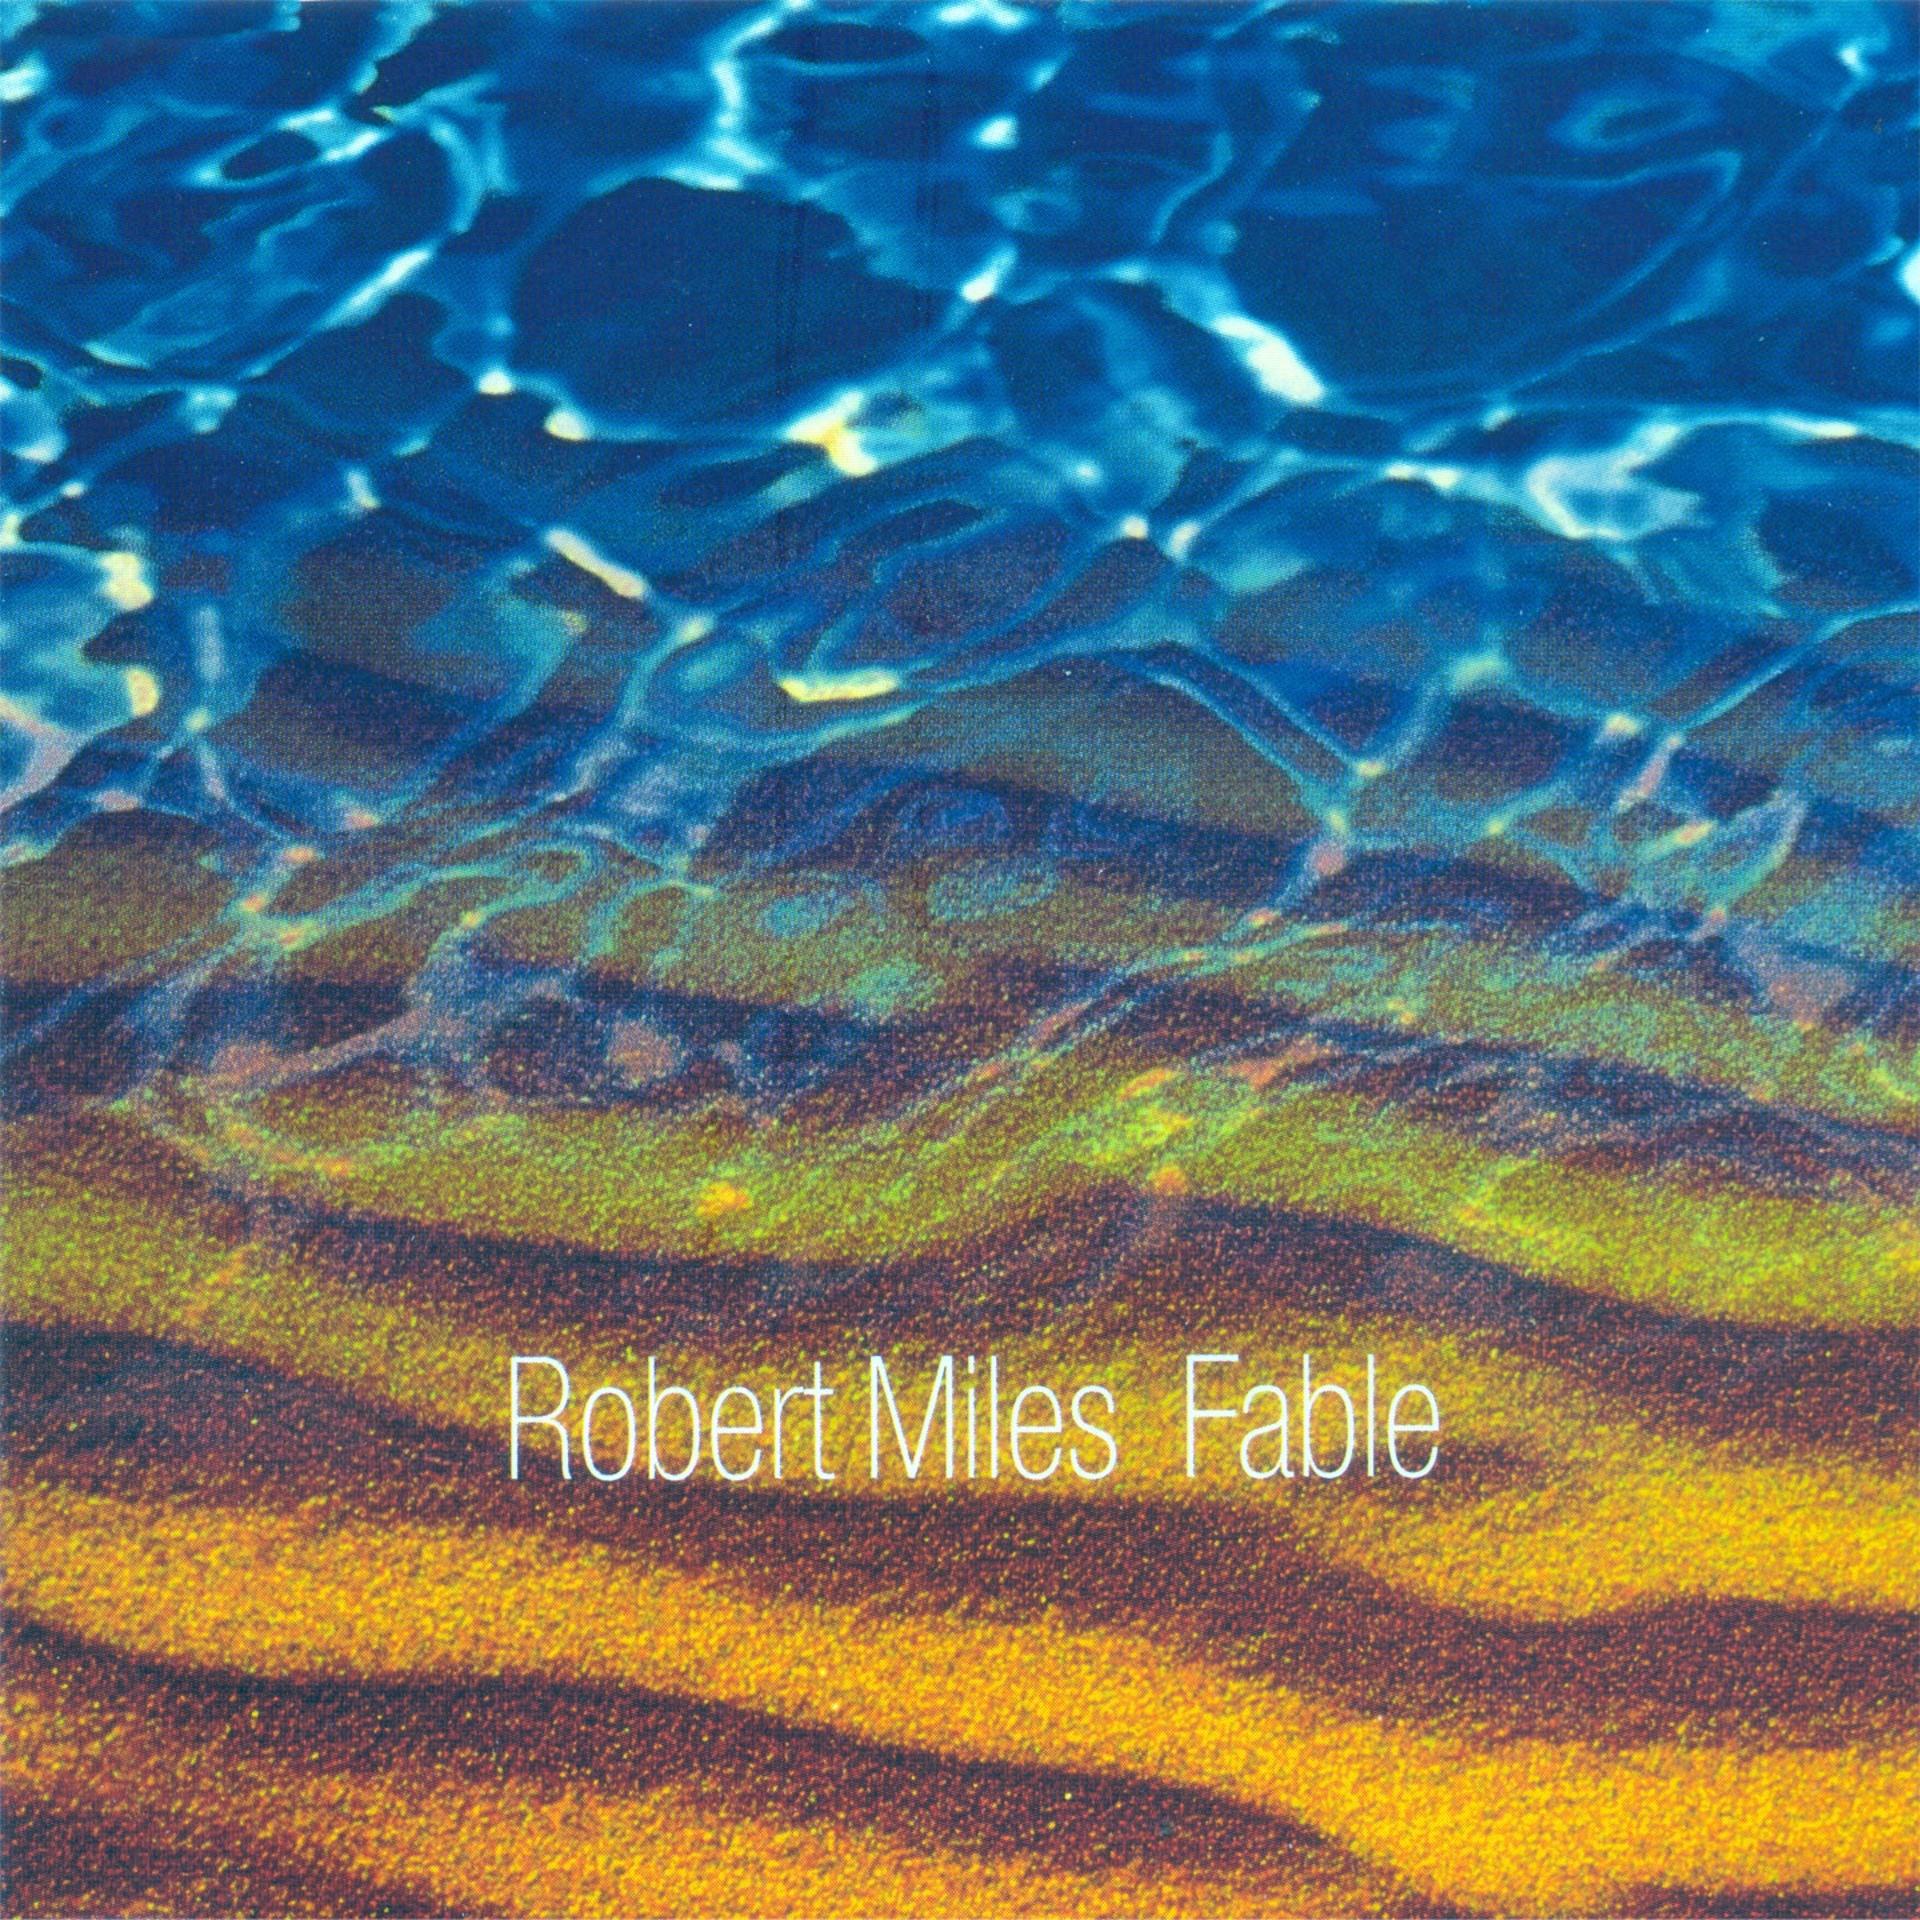 Robert miles remix. Robert Miles - (1996) Fable. Robert Miles Fable (Dream Version). Robert Miles - Fable год. Robert Miles albums.